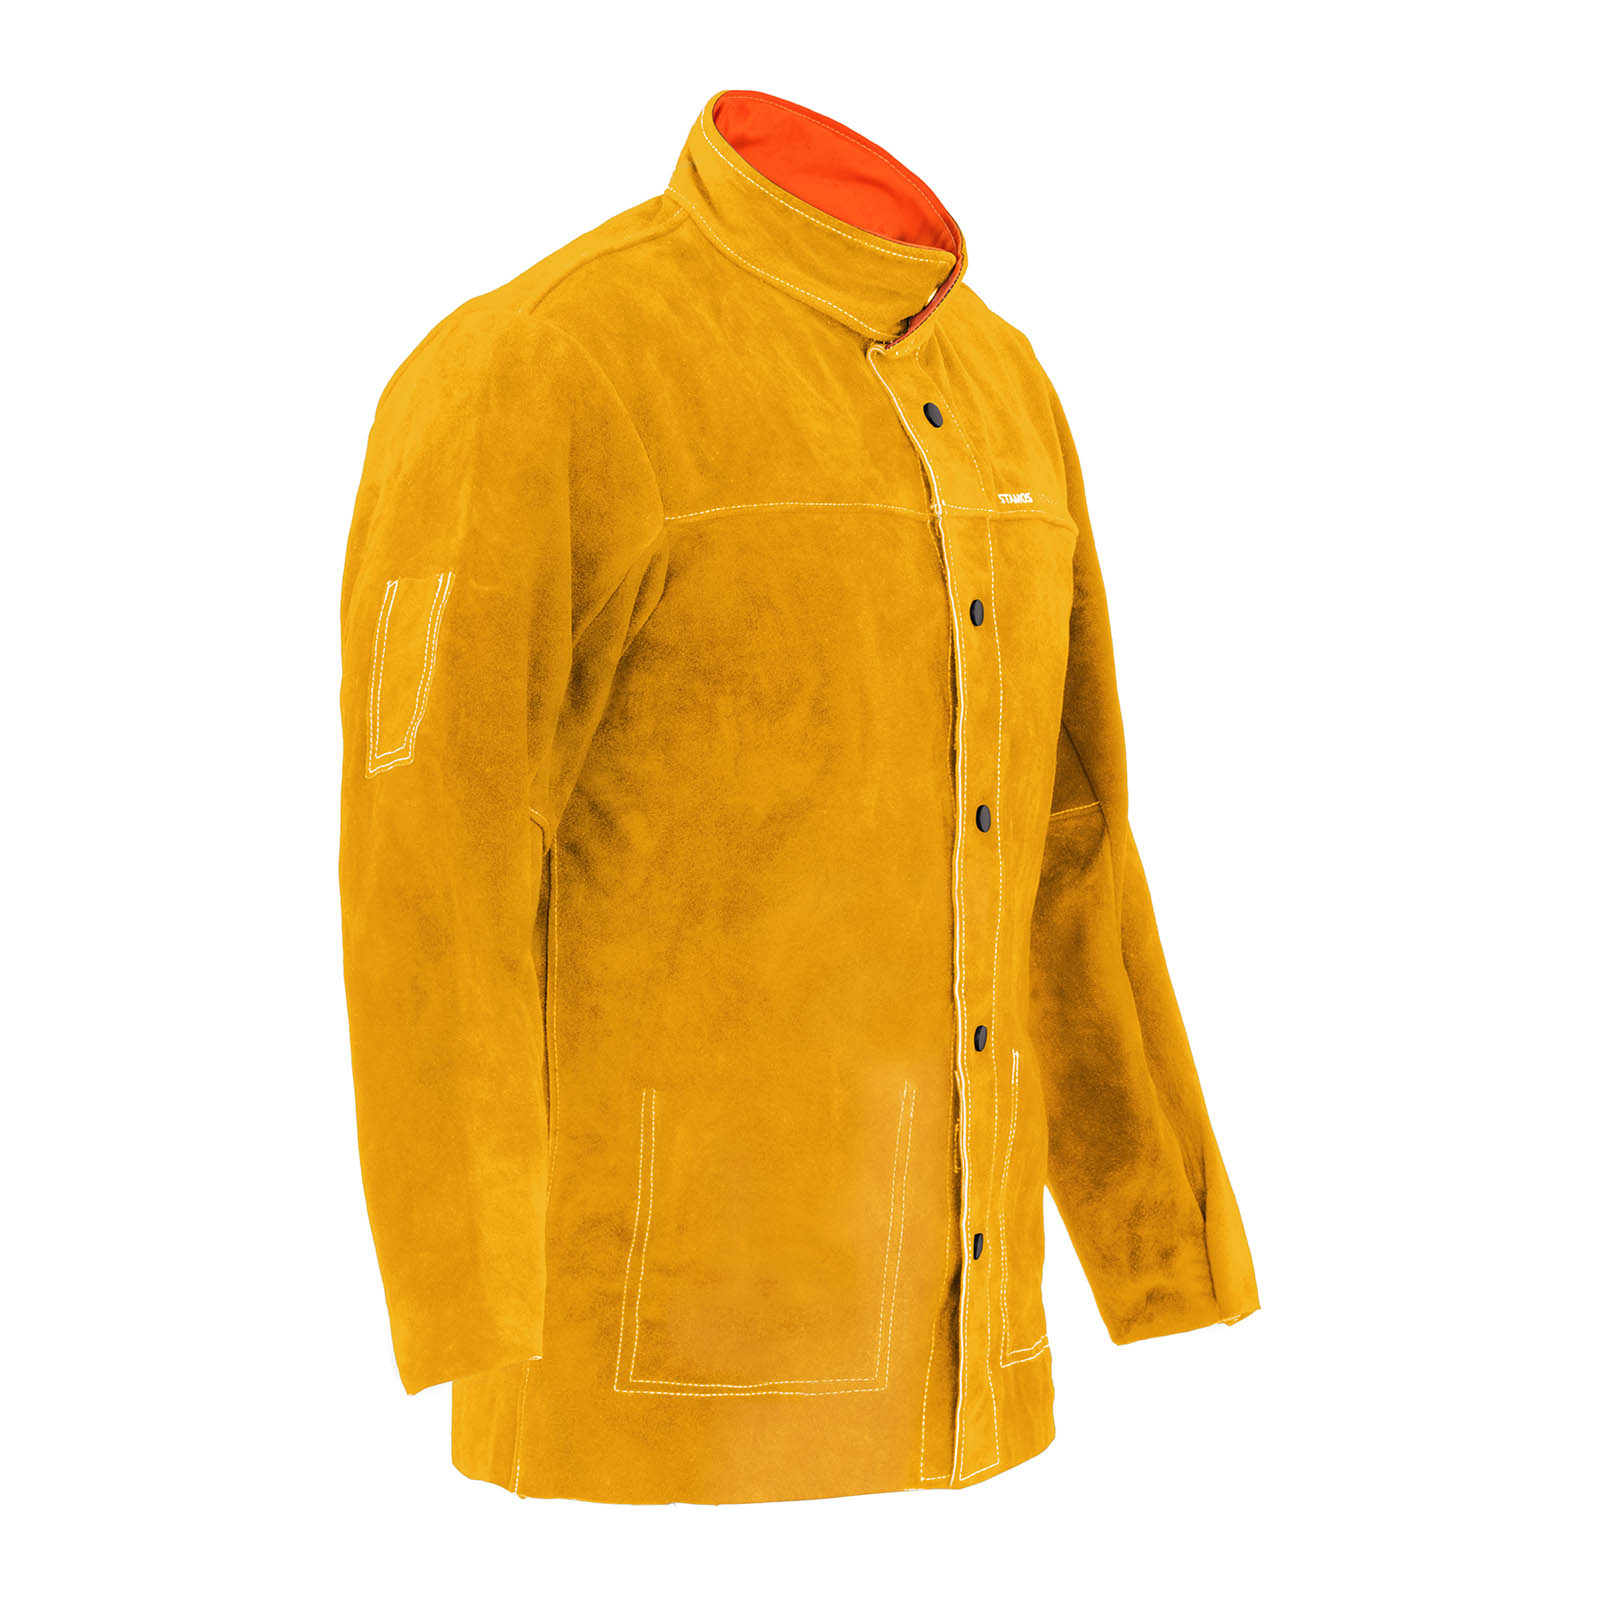 Cow Split Leather Welding Jacket - gold - size L